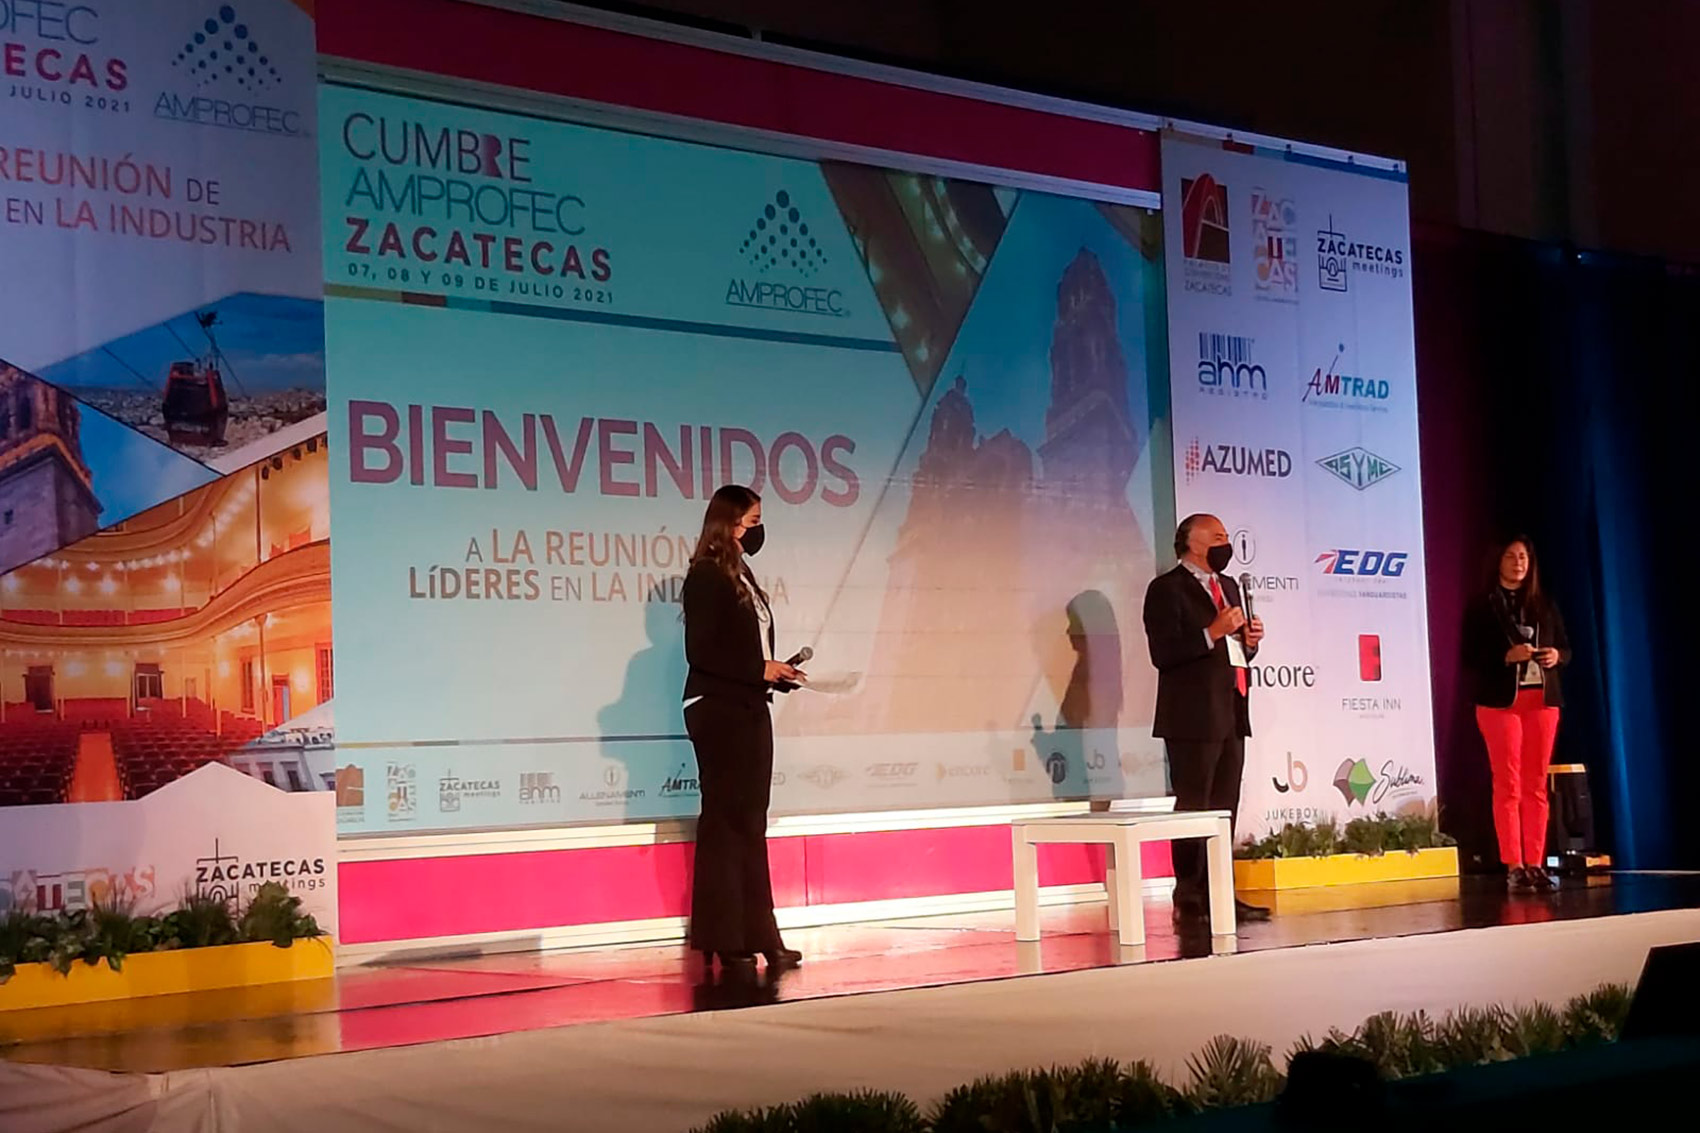 Zacatecas-Lider-Industria-Reuniones